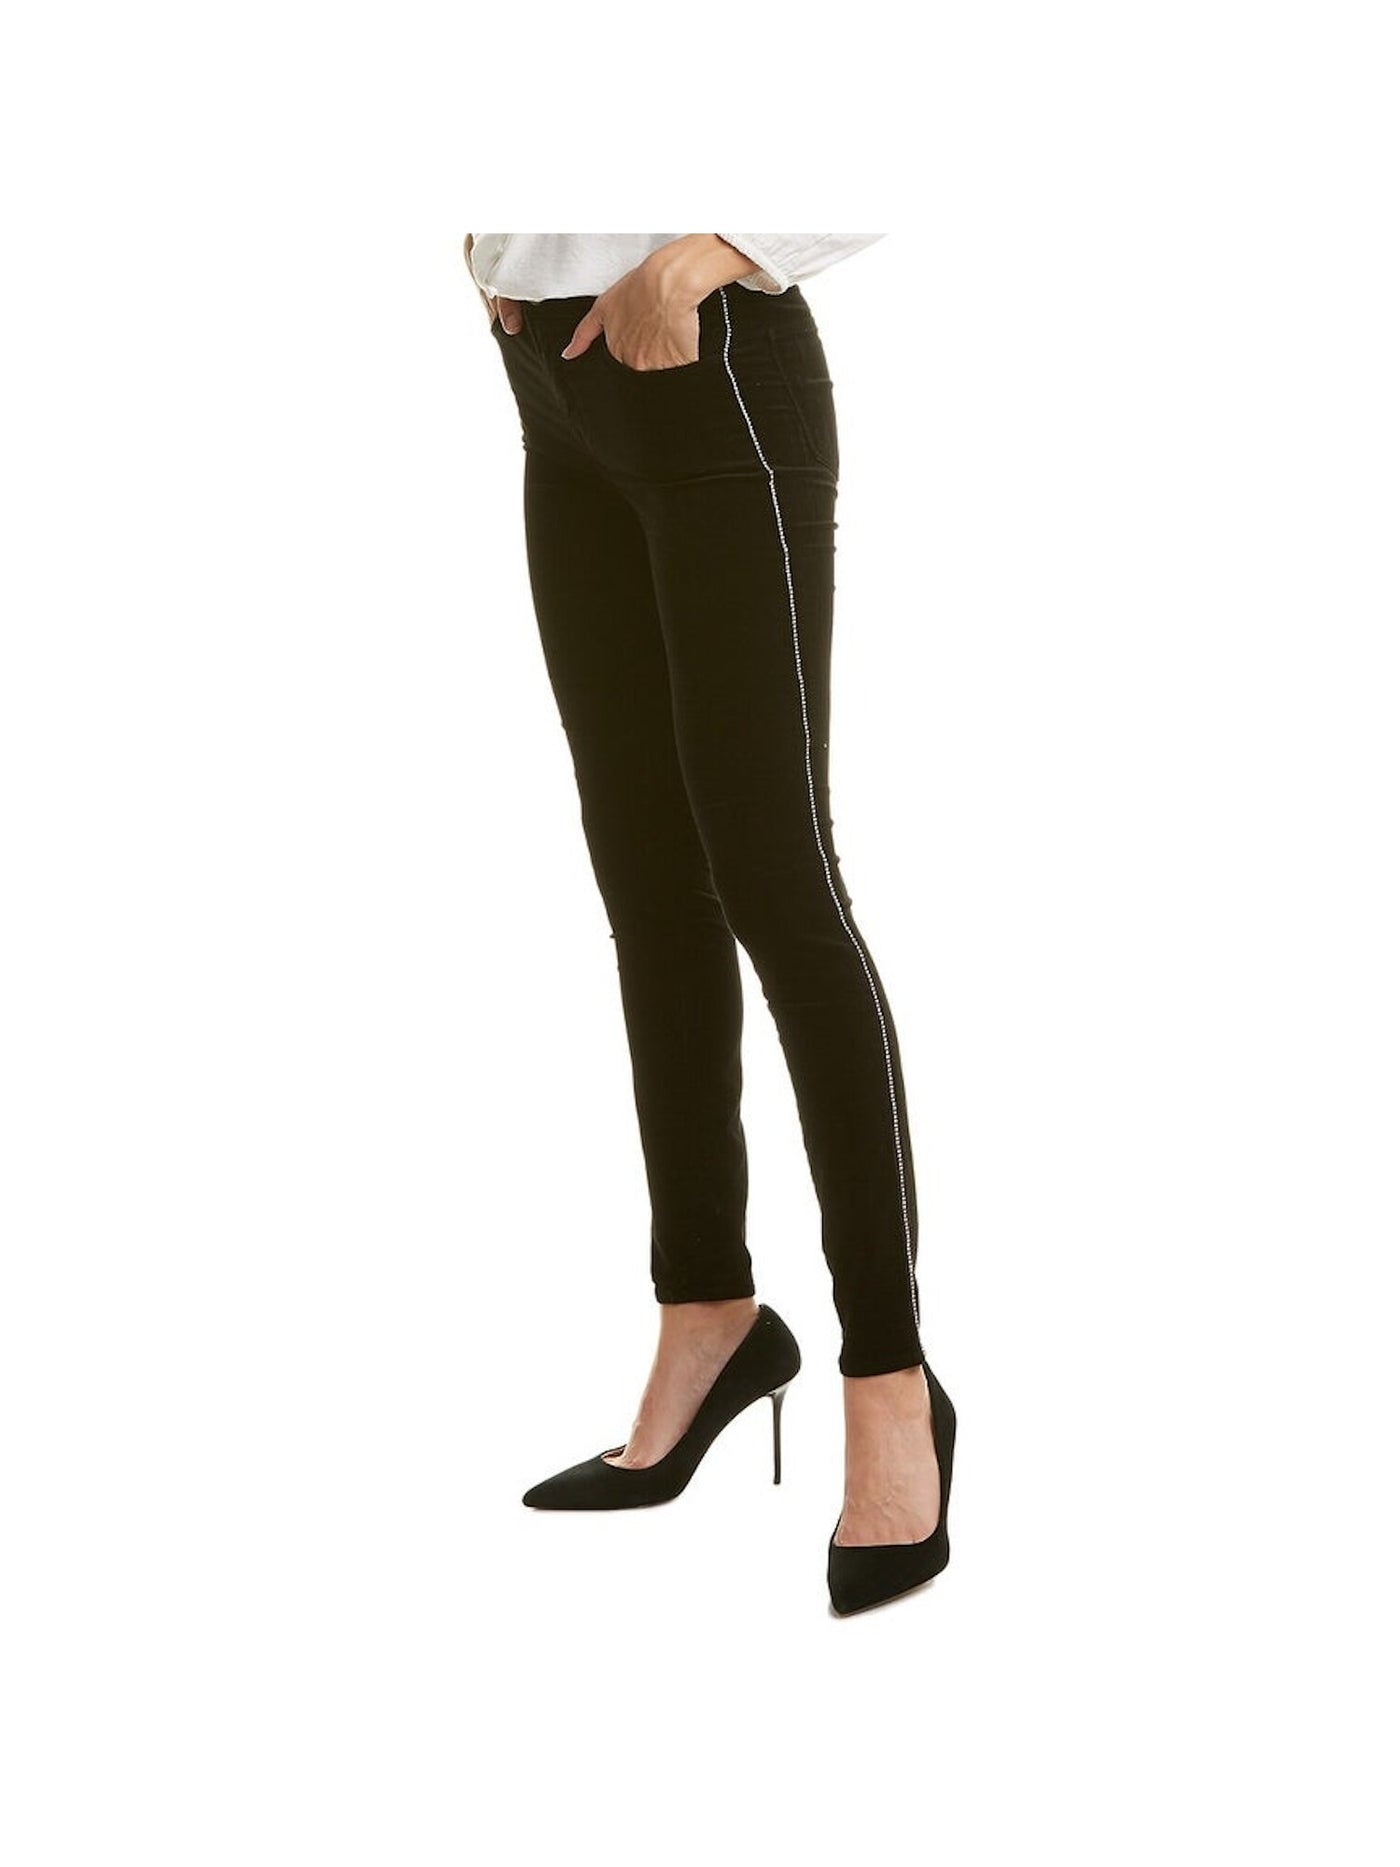 J BRAND Womens Black Embellished Straight leg Pants 25 Waist